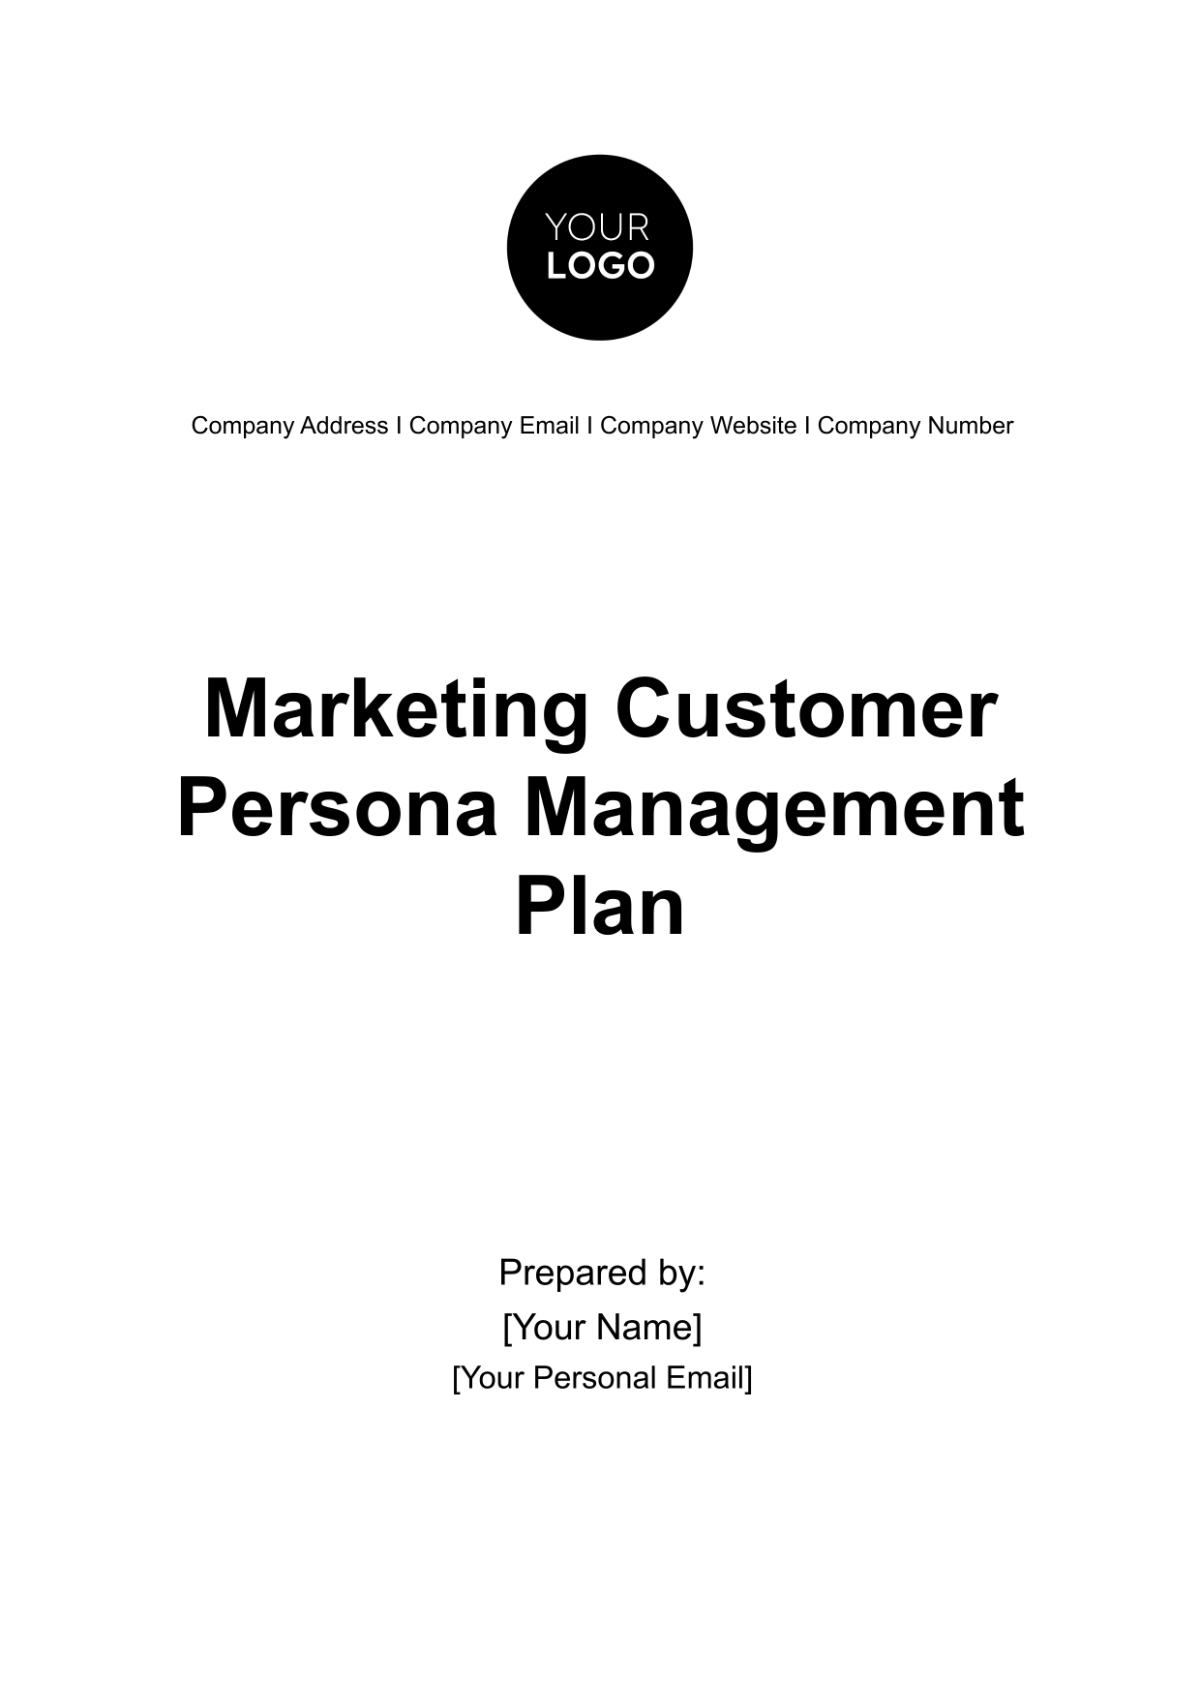 Free Marketing Customer Persona Management Plan Template